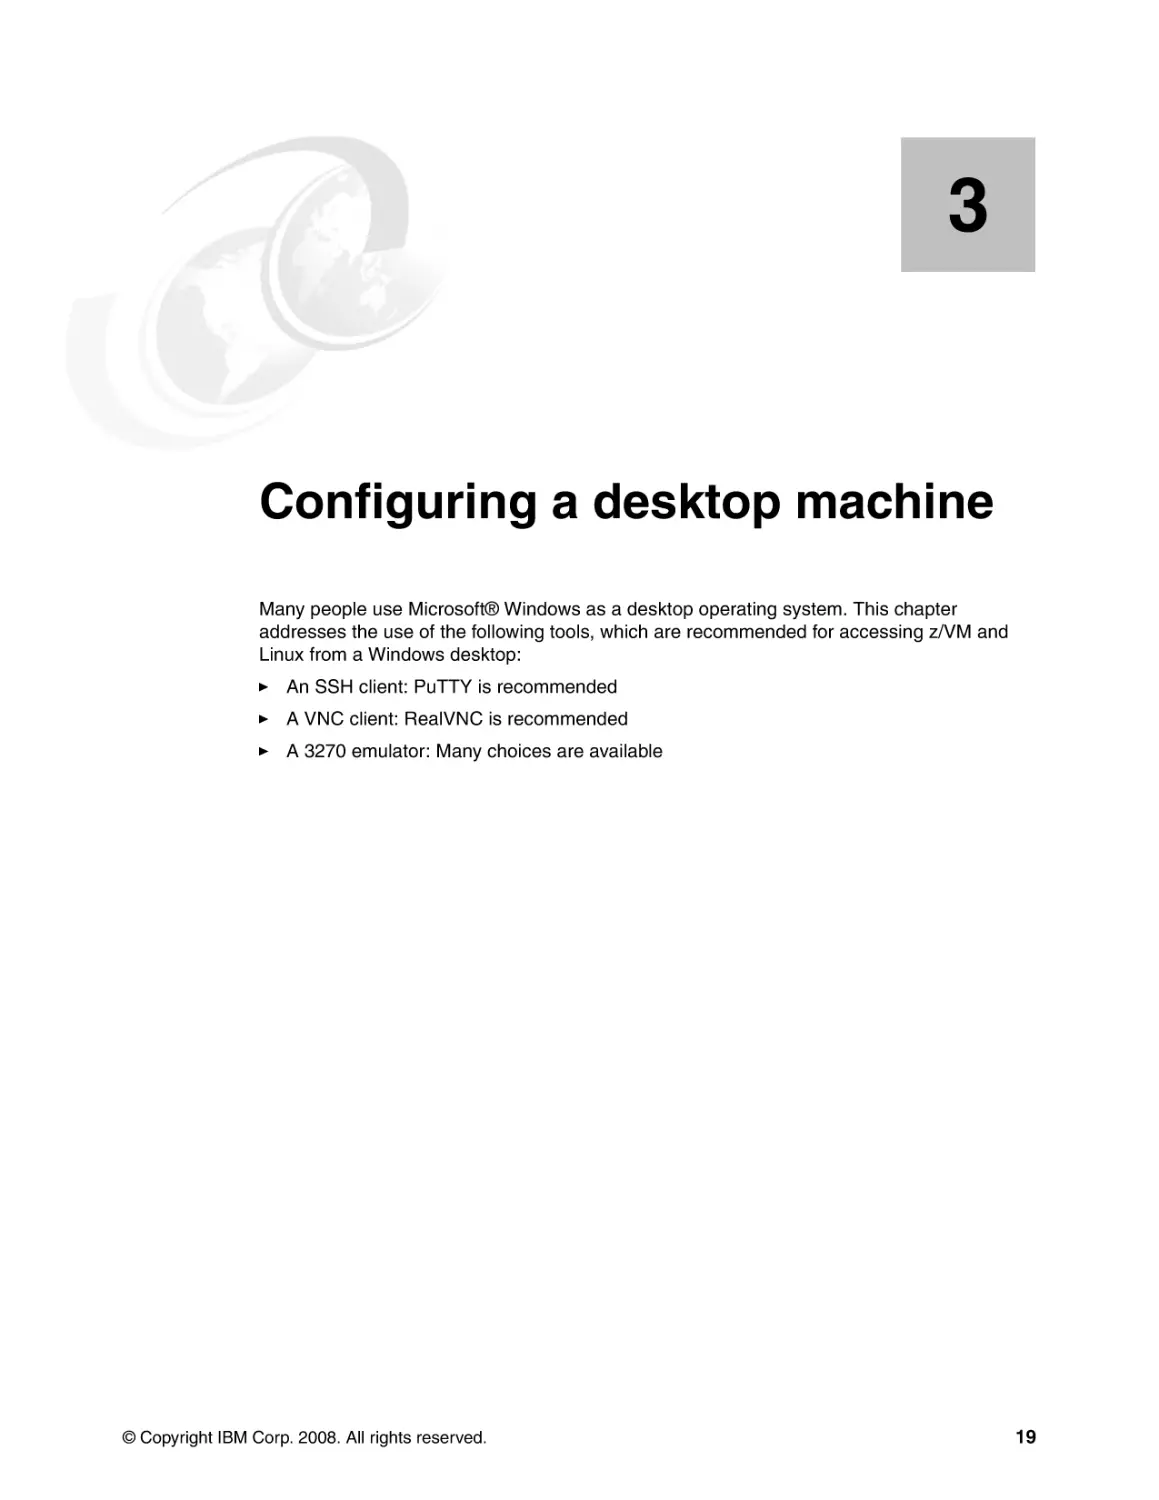 Chapter 3. Configuring a desktop machine